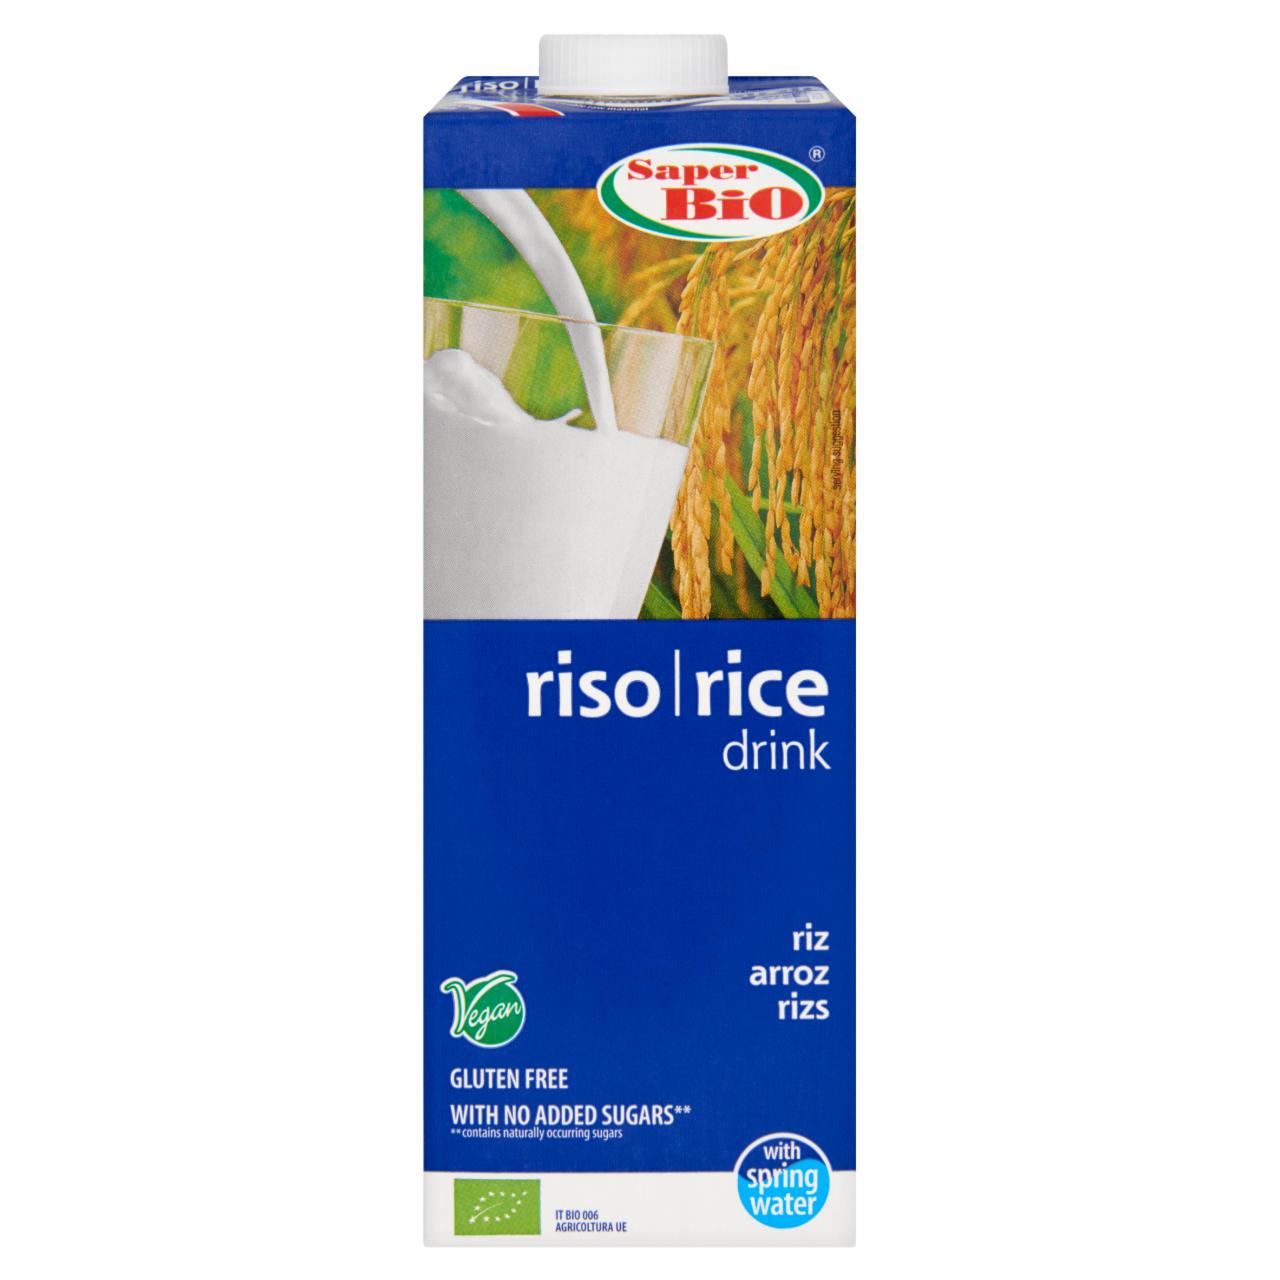 Képek - Saper Bio BIO natúr rizsital 1 l